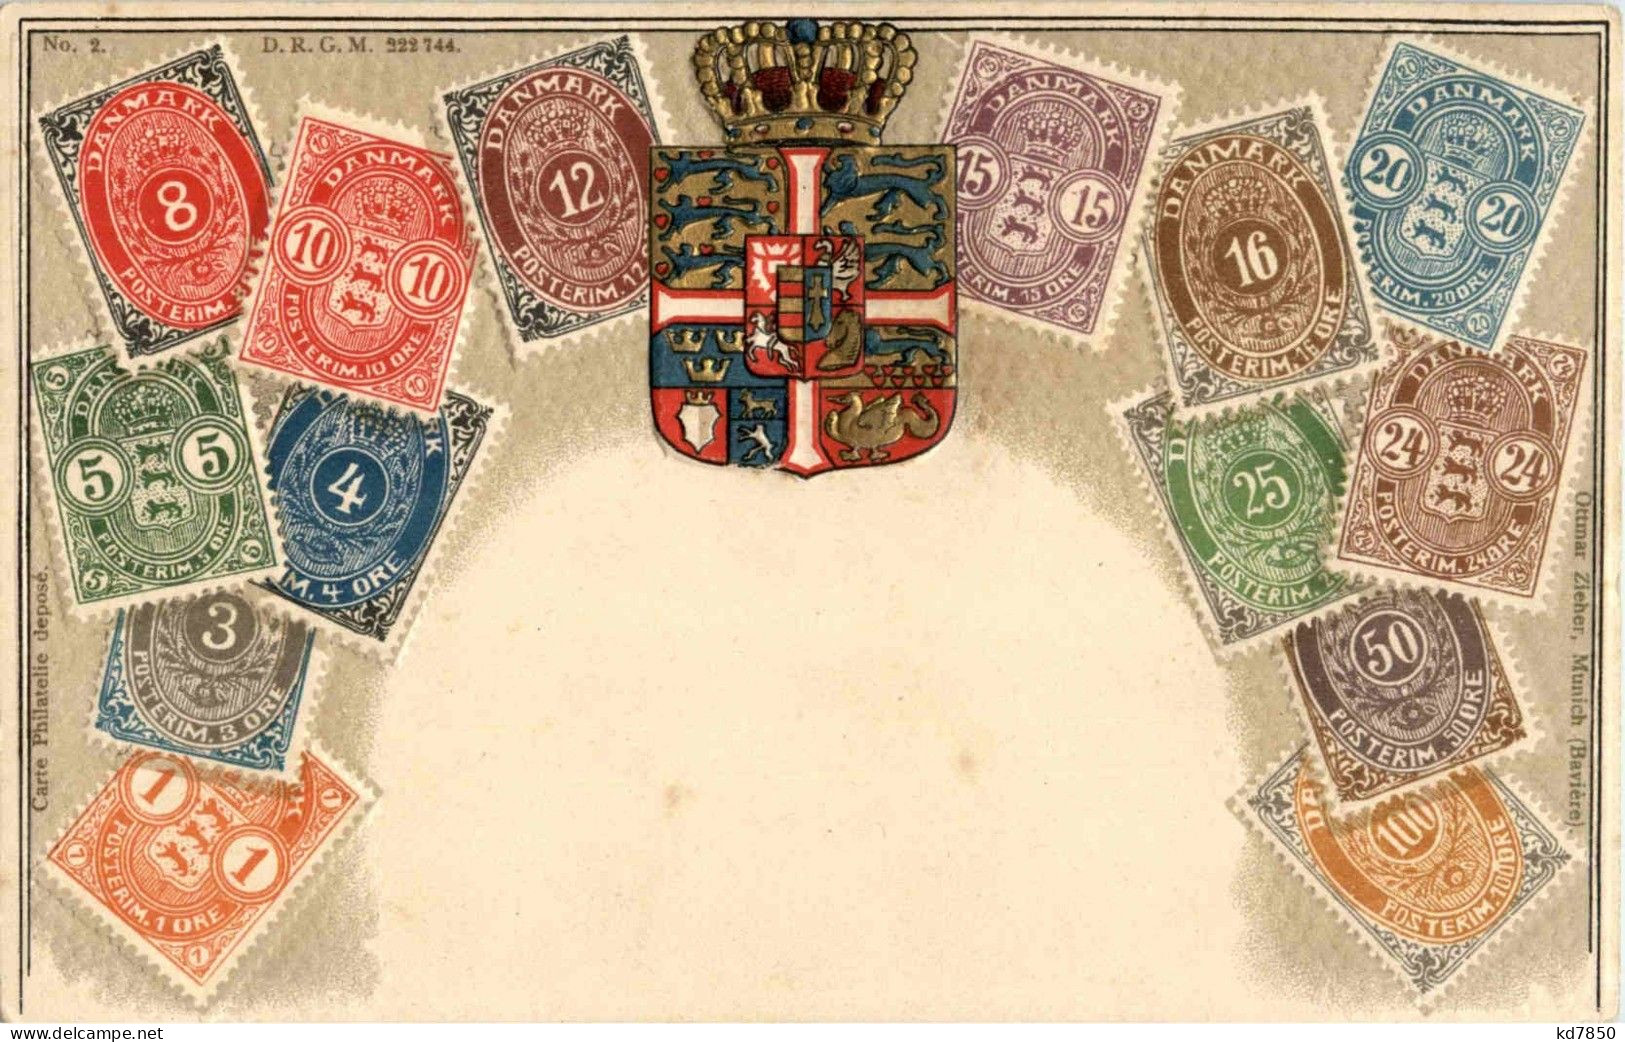 Danmark - Briefmarken - Stamps - Prägekarte - Timbres (représentations)